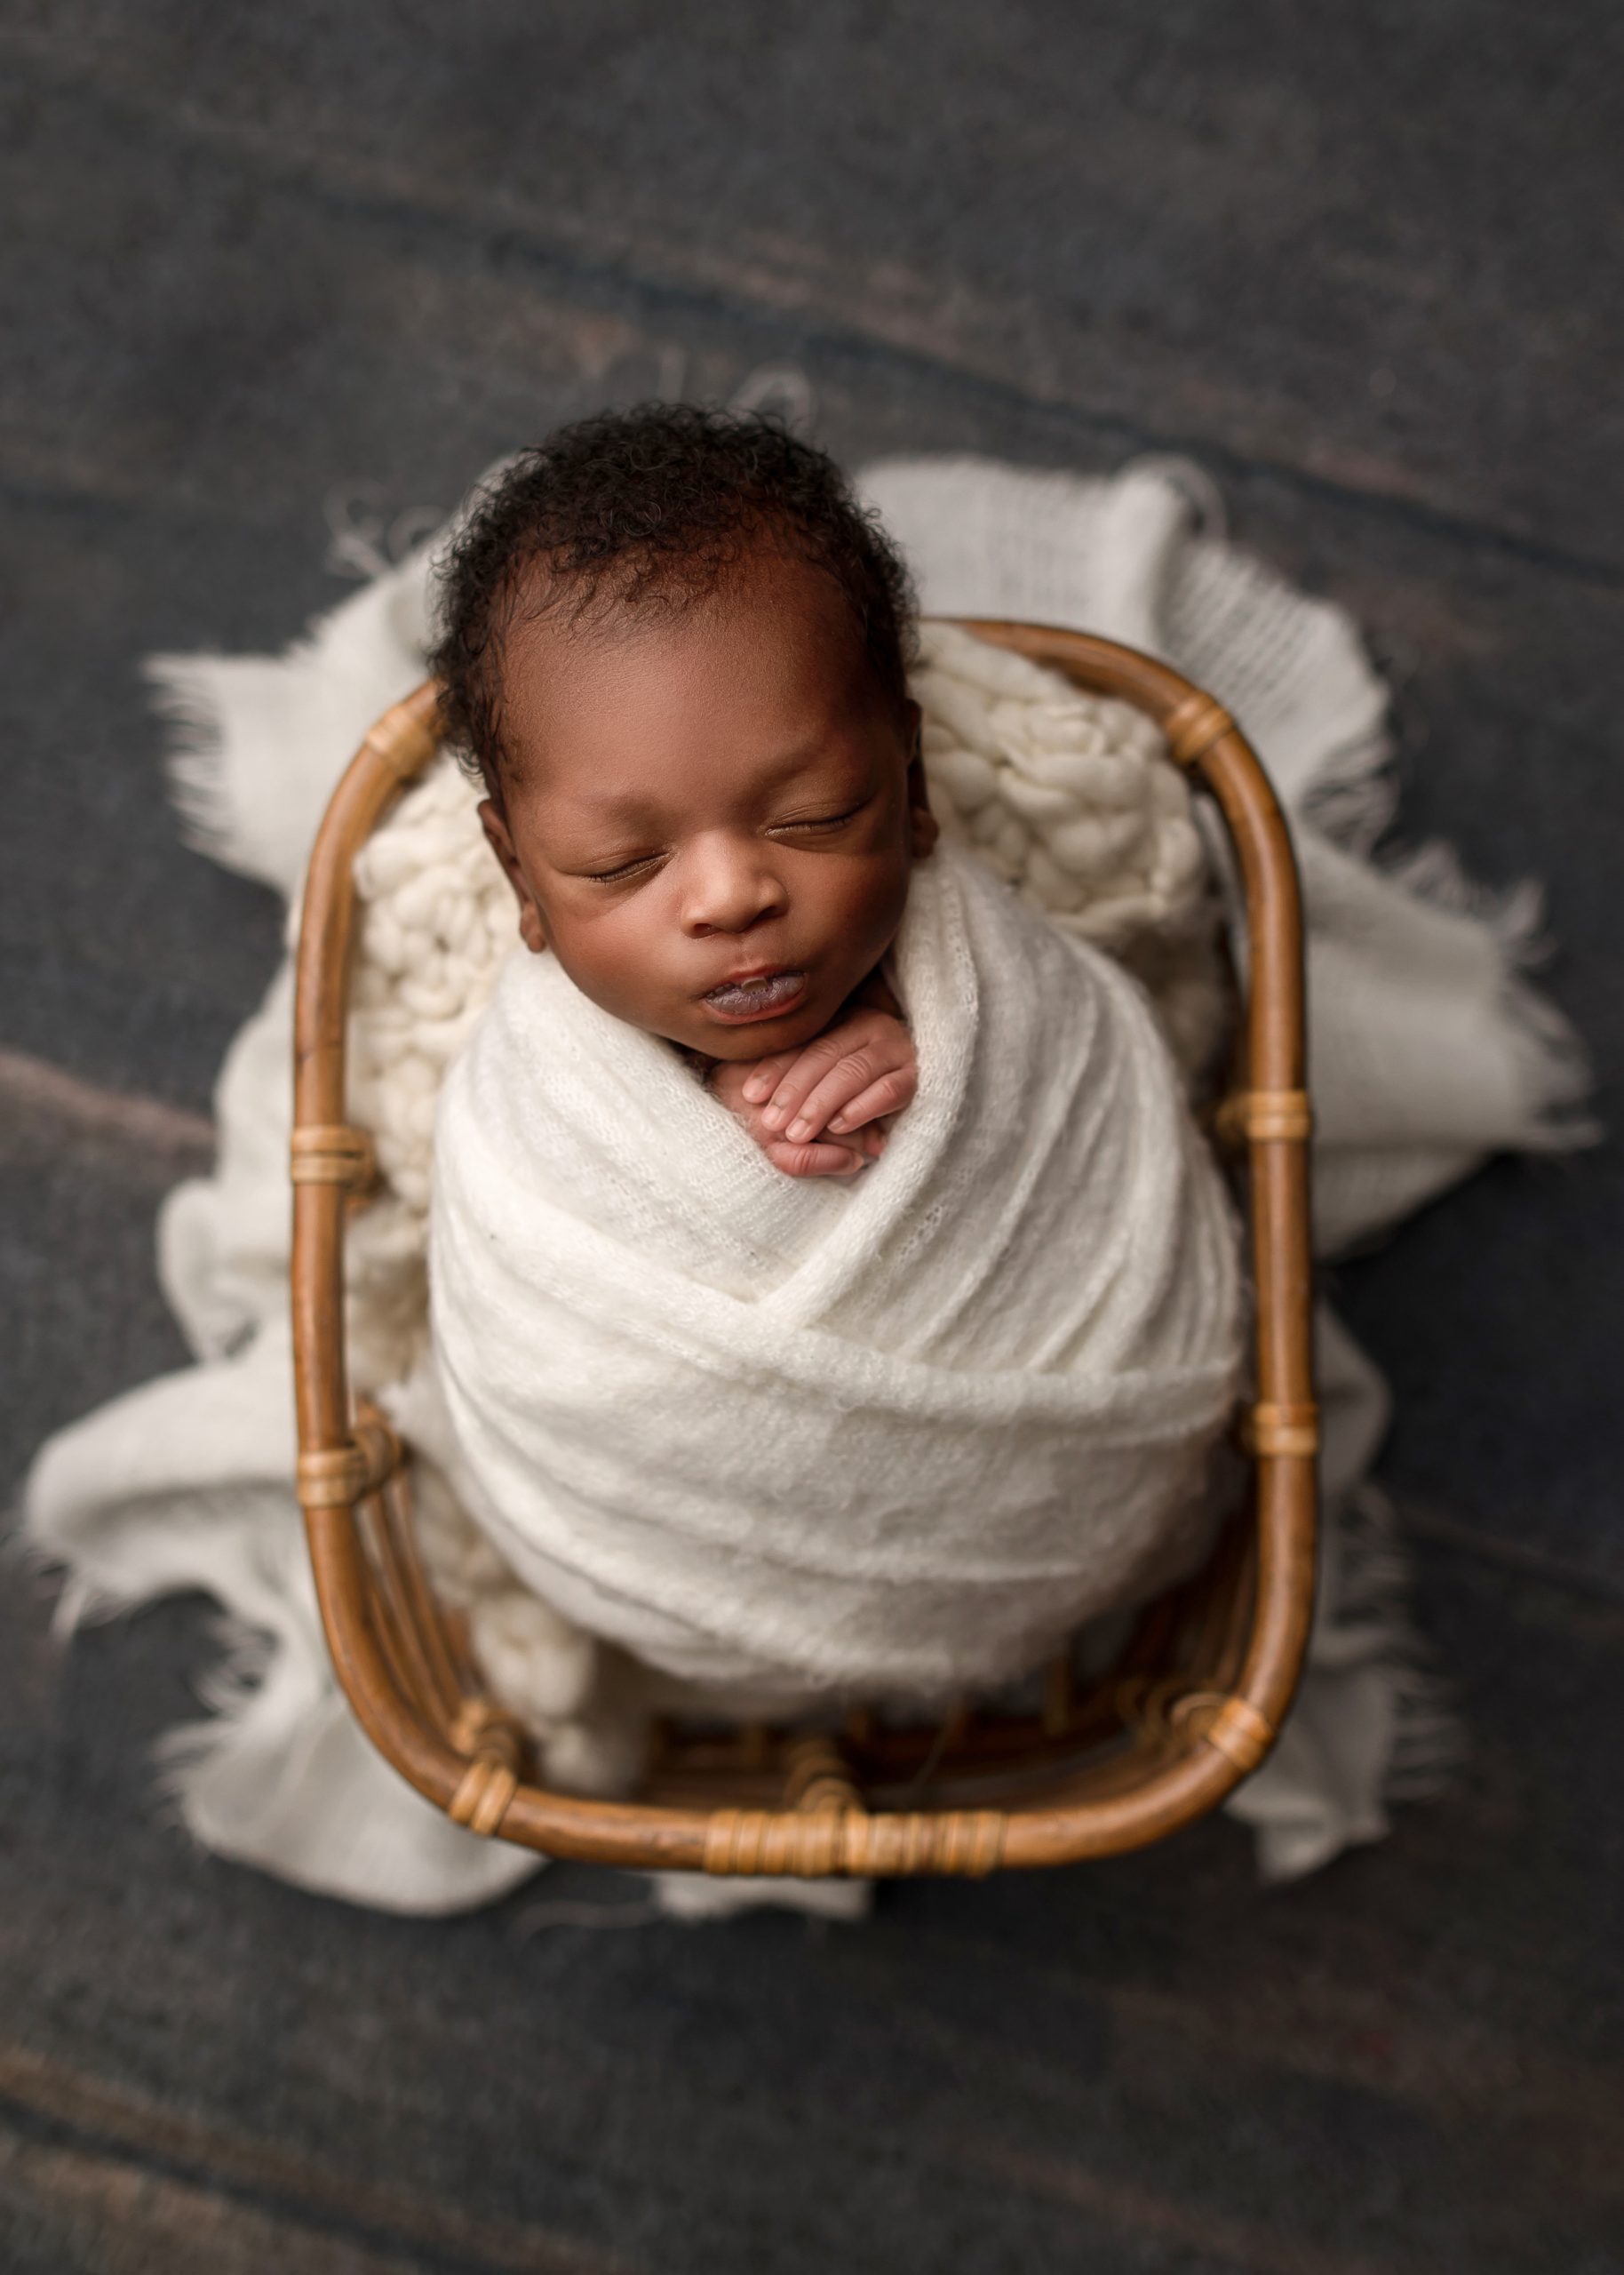 medfield ma newborn photographer, newborn photography near me, professional newborn photos, newborn portrait studio